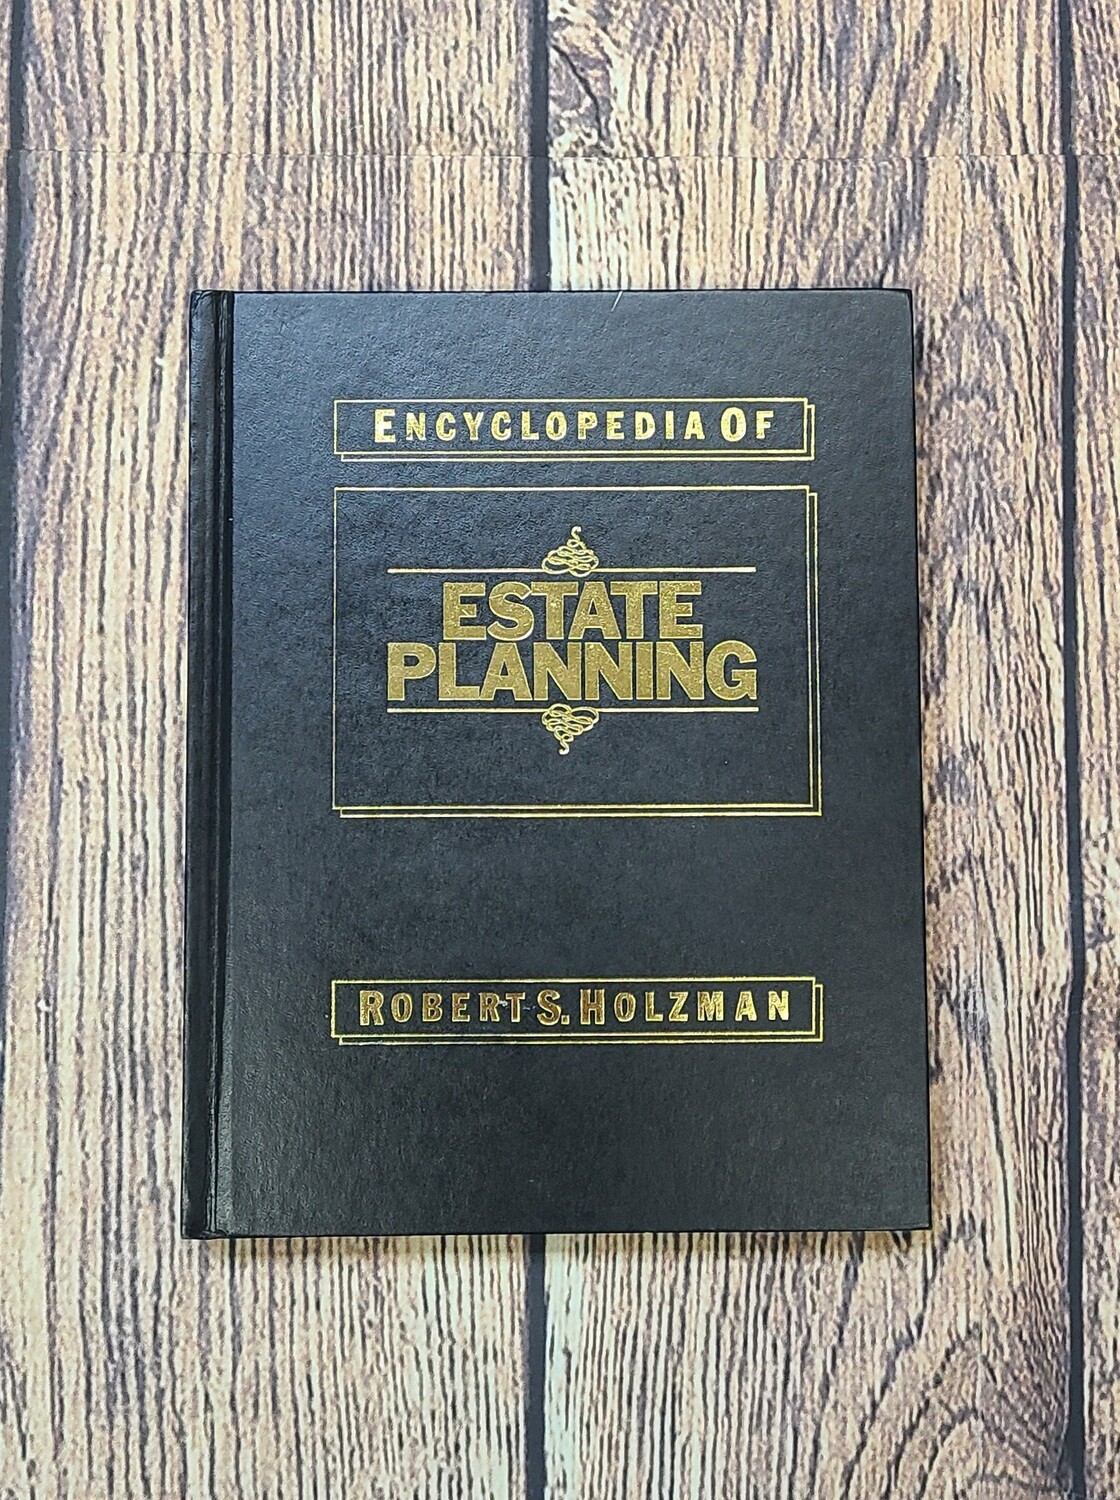 Encyclopedia of Estate Planning by Robert S. Holzman